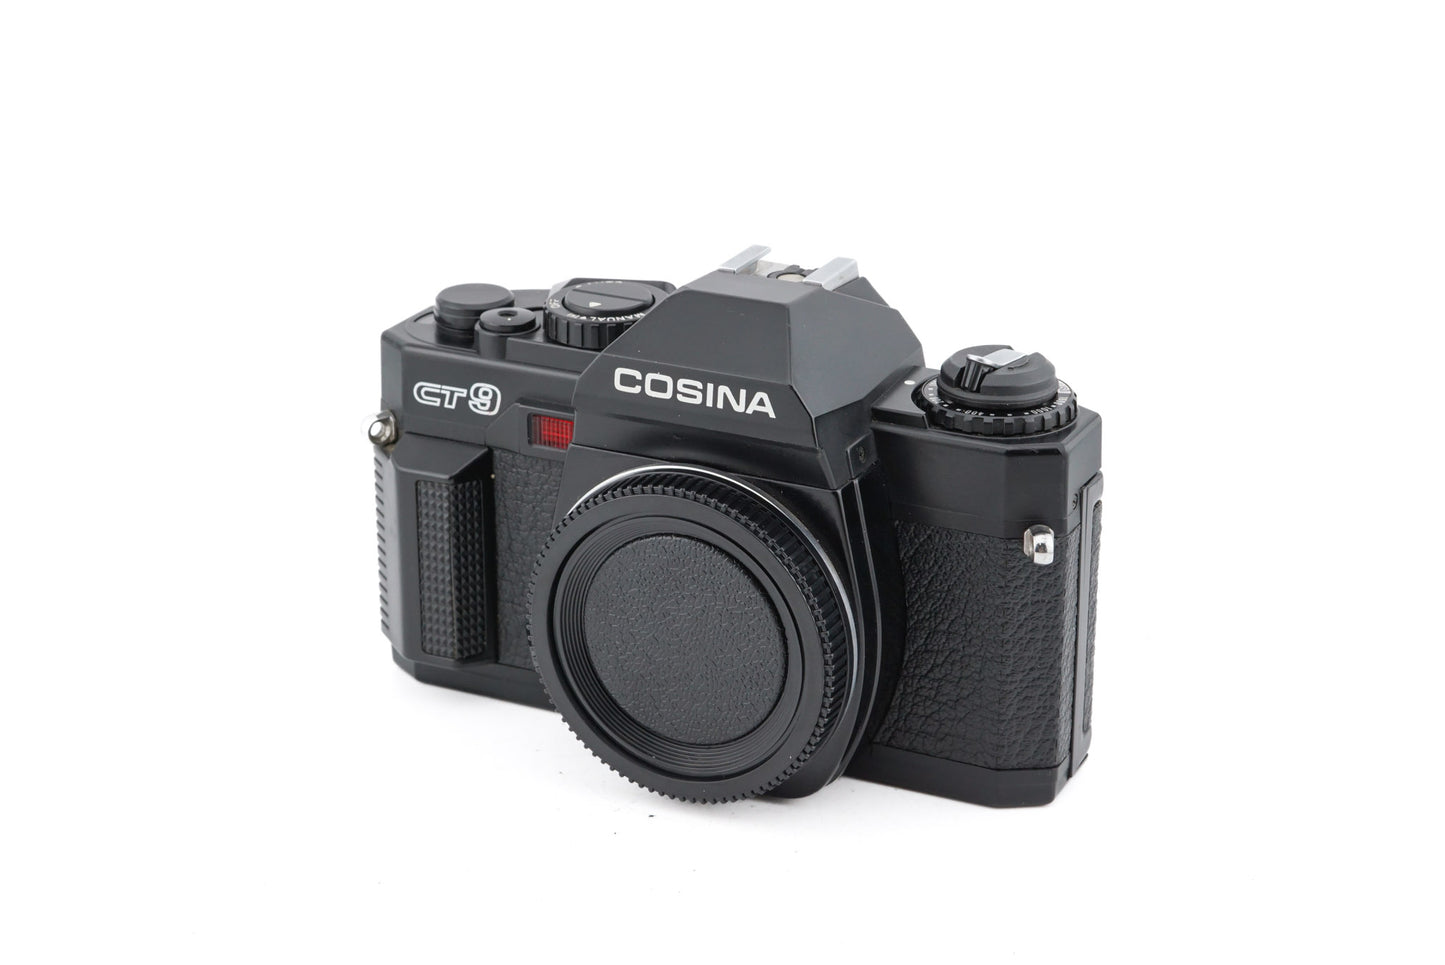 Cosina CT-9 Camera